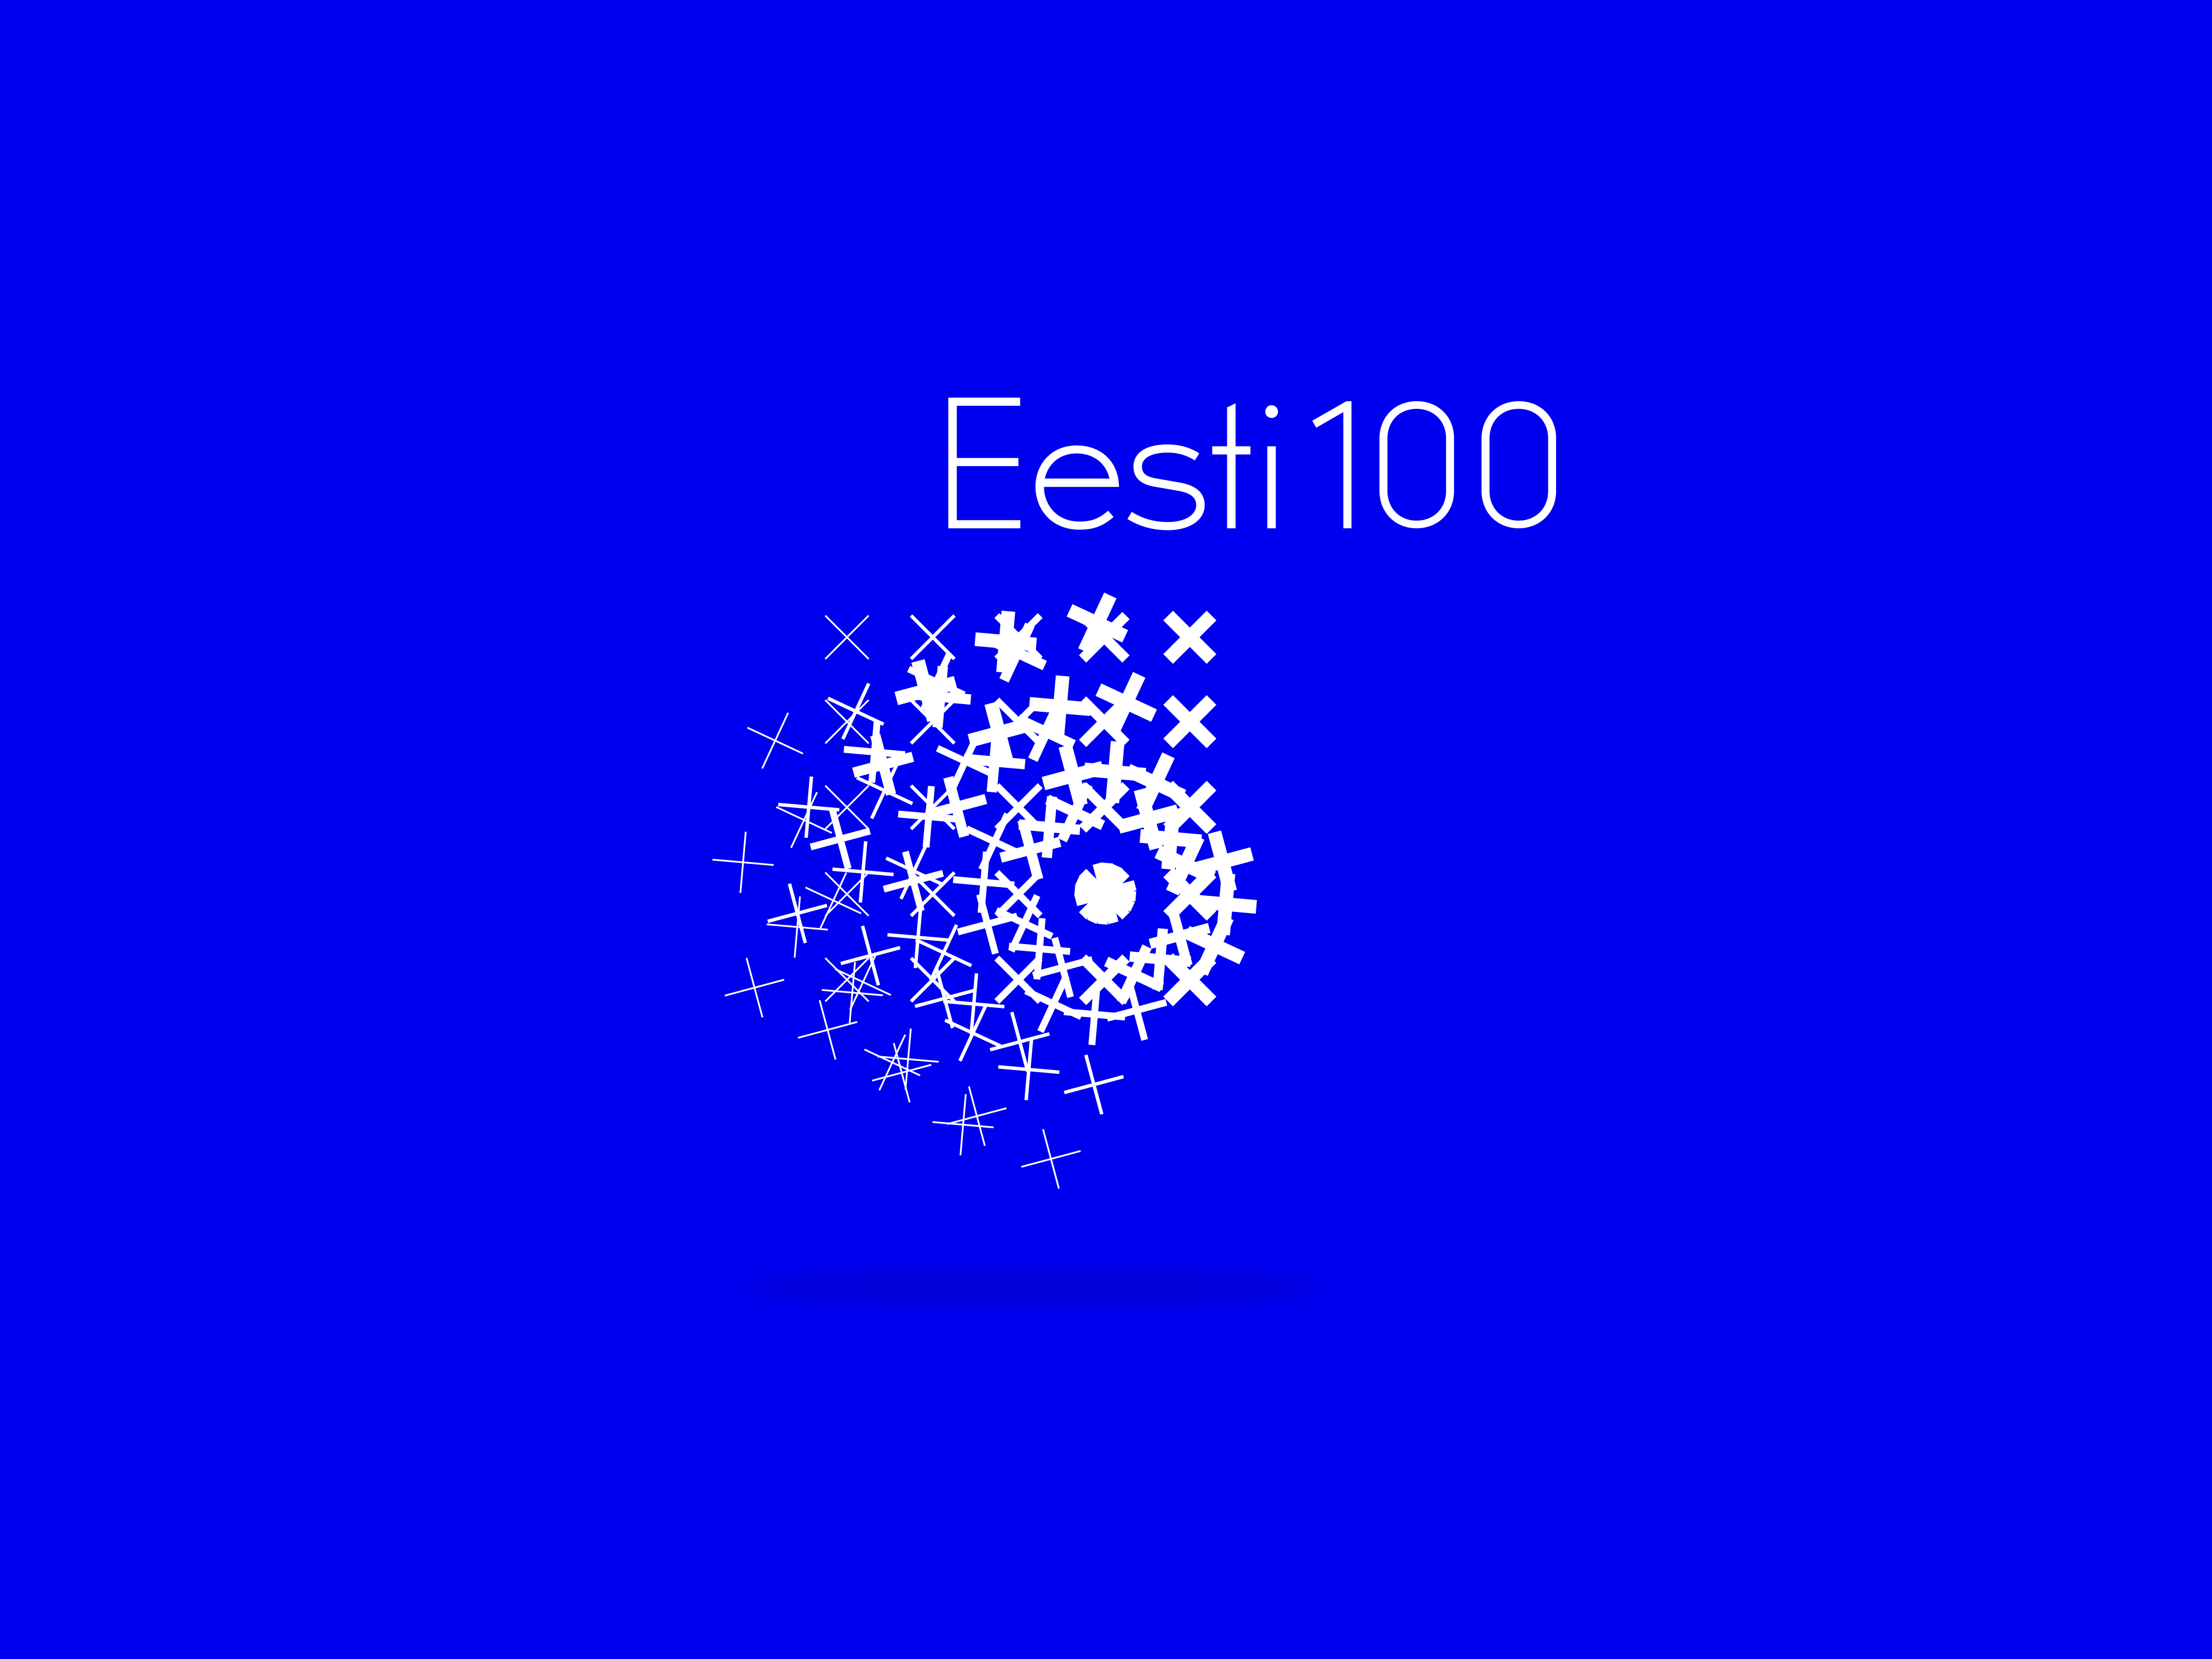 Estonia 100 – Concept